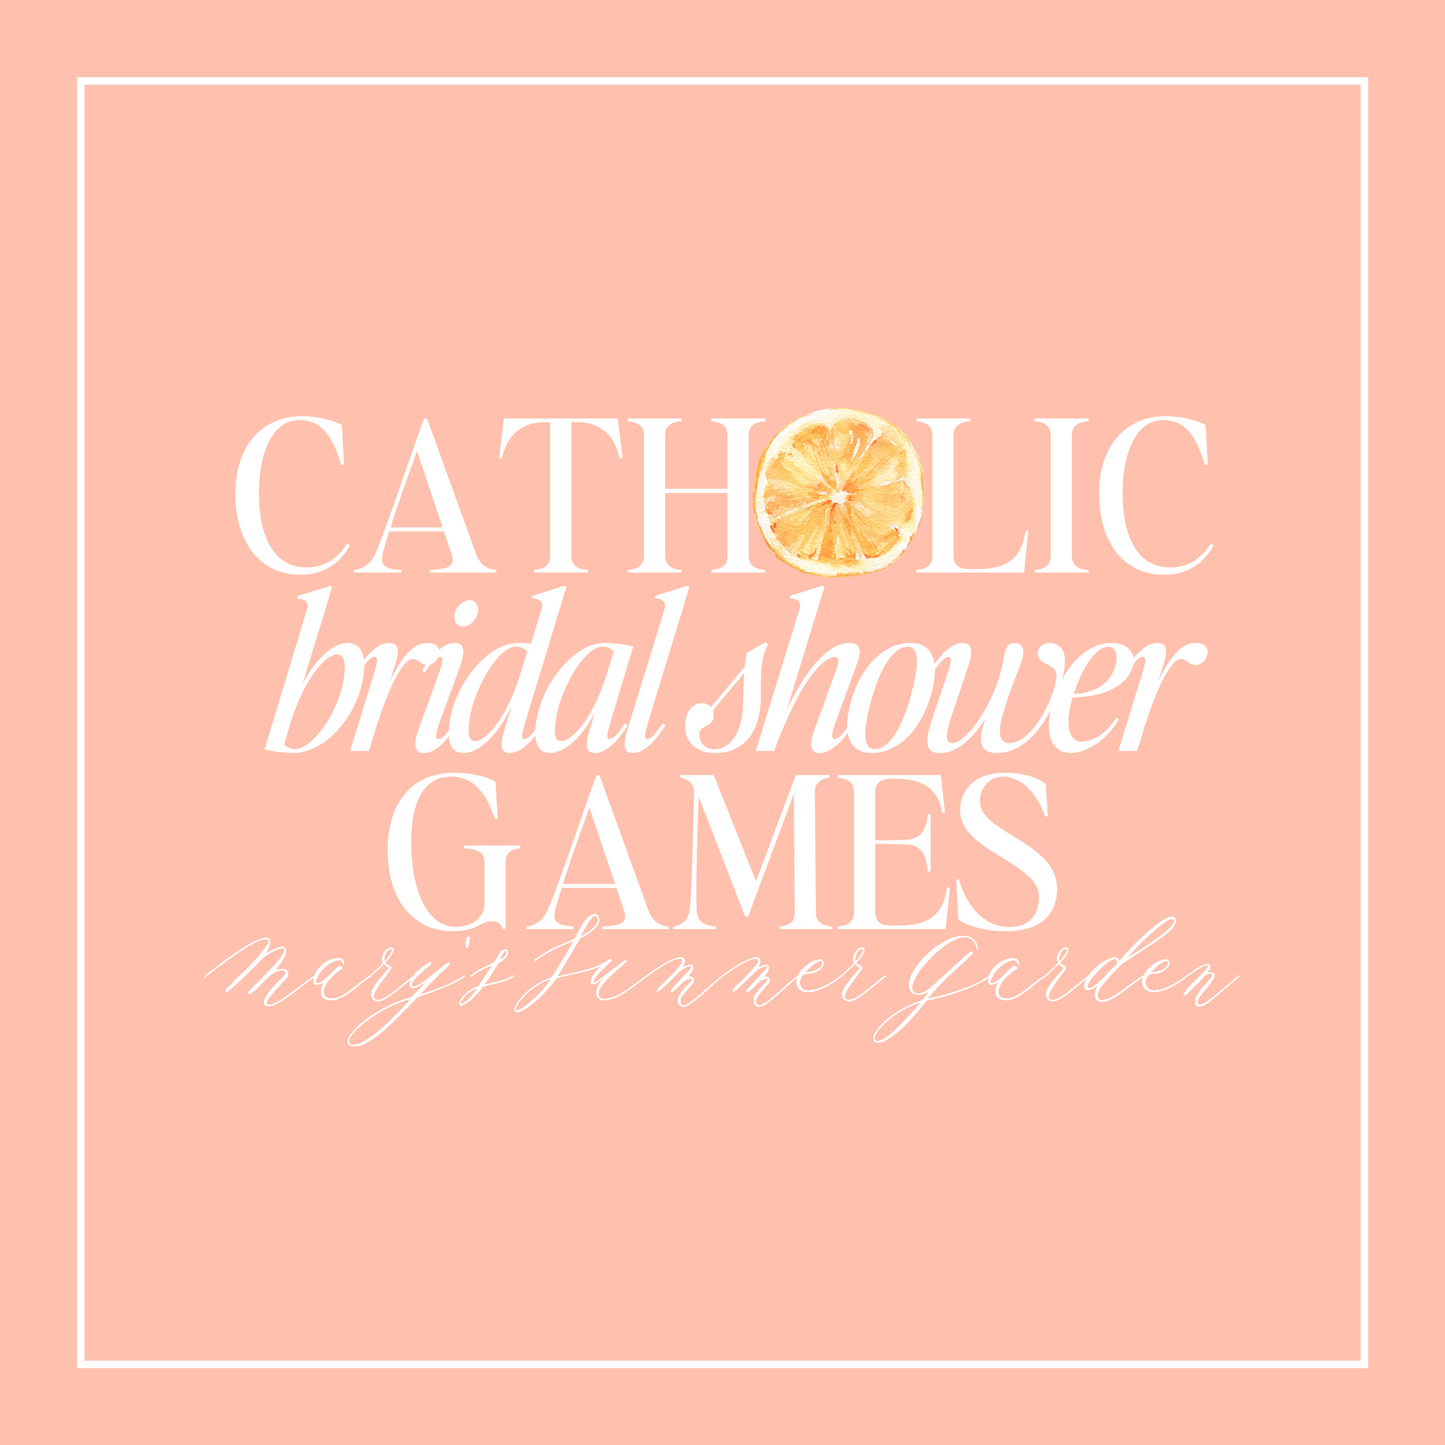 Catholic Bridal Shower Games: Mary's Summer Garden Edition | Instant Digital Download